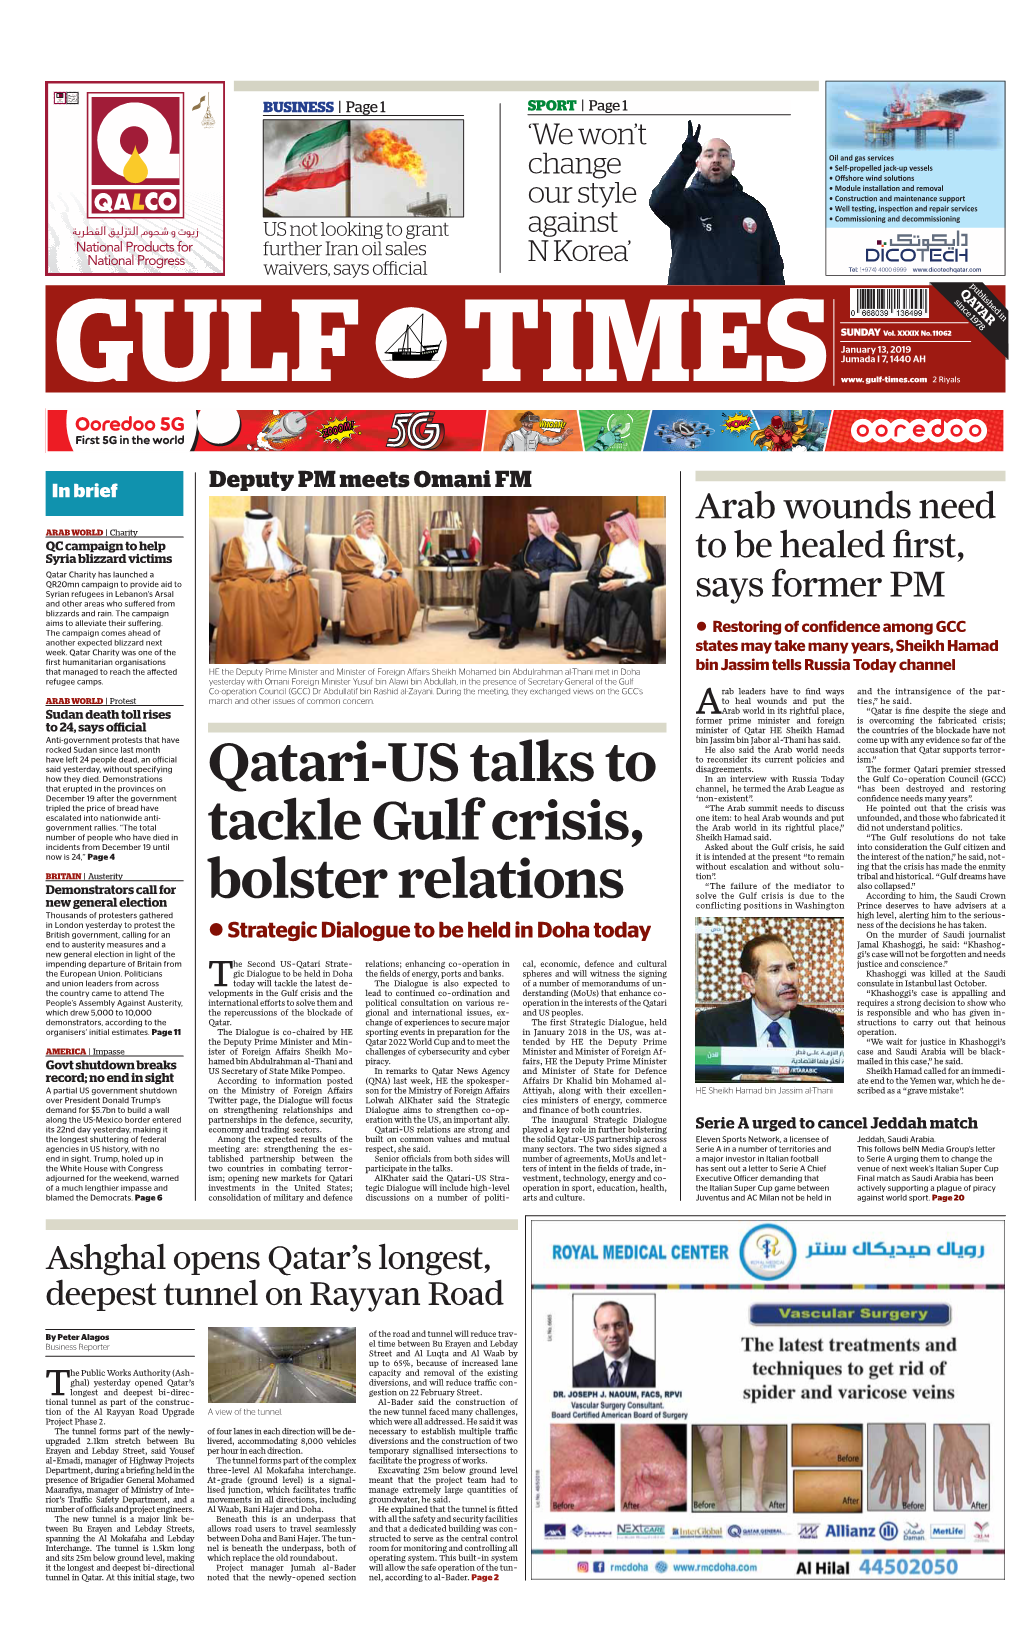 Qatari-US Talks to Tackle Gulf Crisis, Bolster Relations